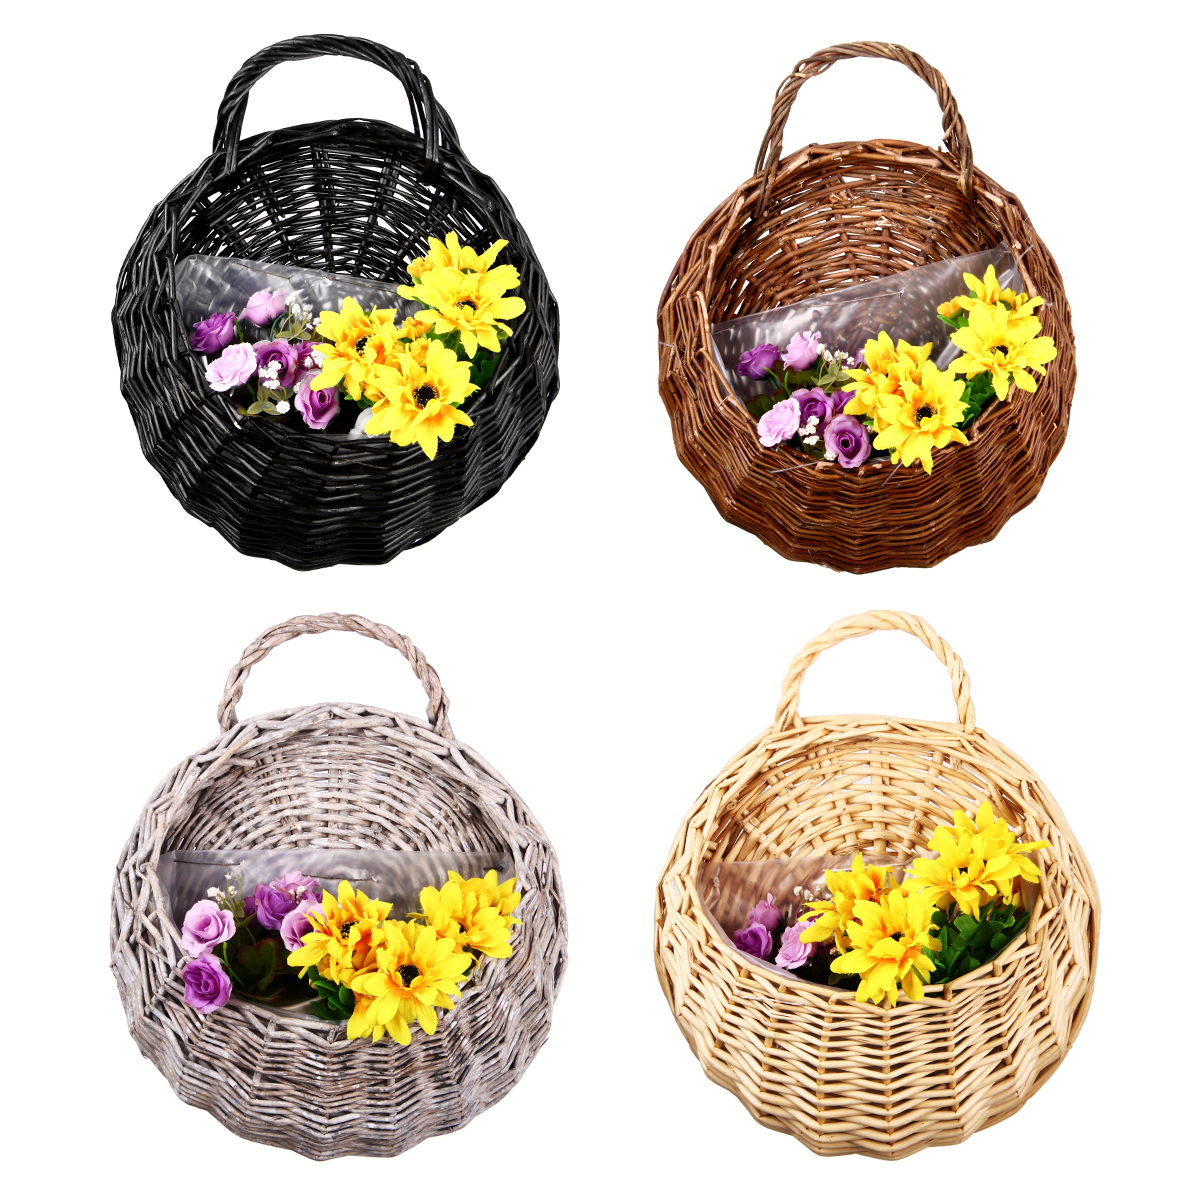 Rustic-Wicker-Rattan-Wall-Hanging-Flower-Baskets-Pot-Home-Balcony-Wedding-Decor-Gift-1644307-1